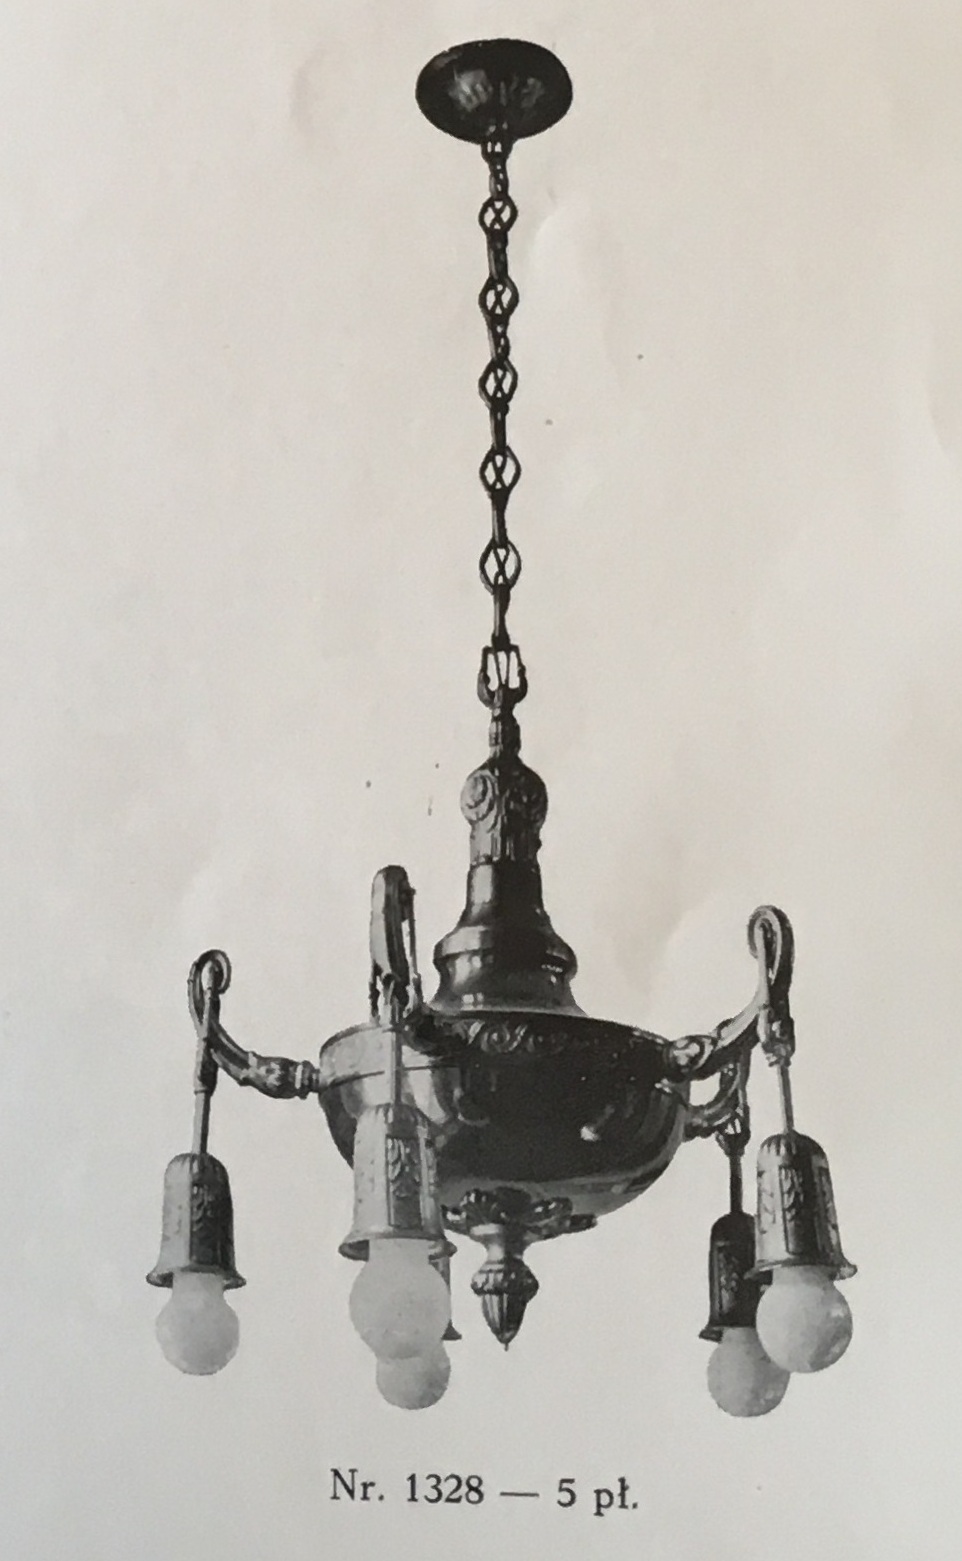 A chandelier from the catalogue of 1928 of the Nowik & Serejski factory. Reproduced from: Katalog fabryka żyrandoli Nowik i Serejski, Warszawa, 1928, p. 23.